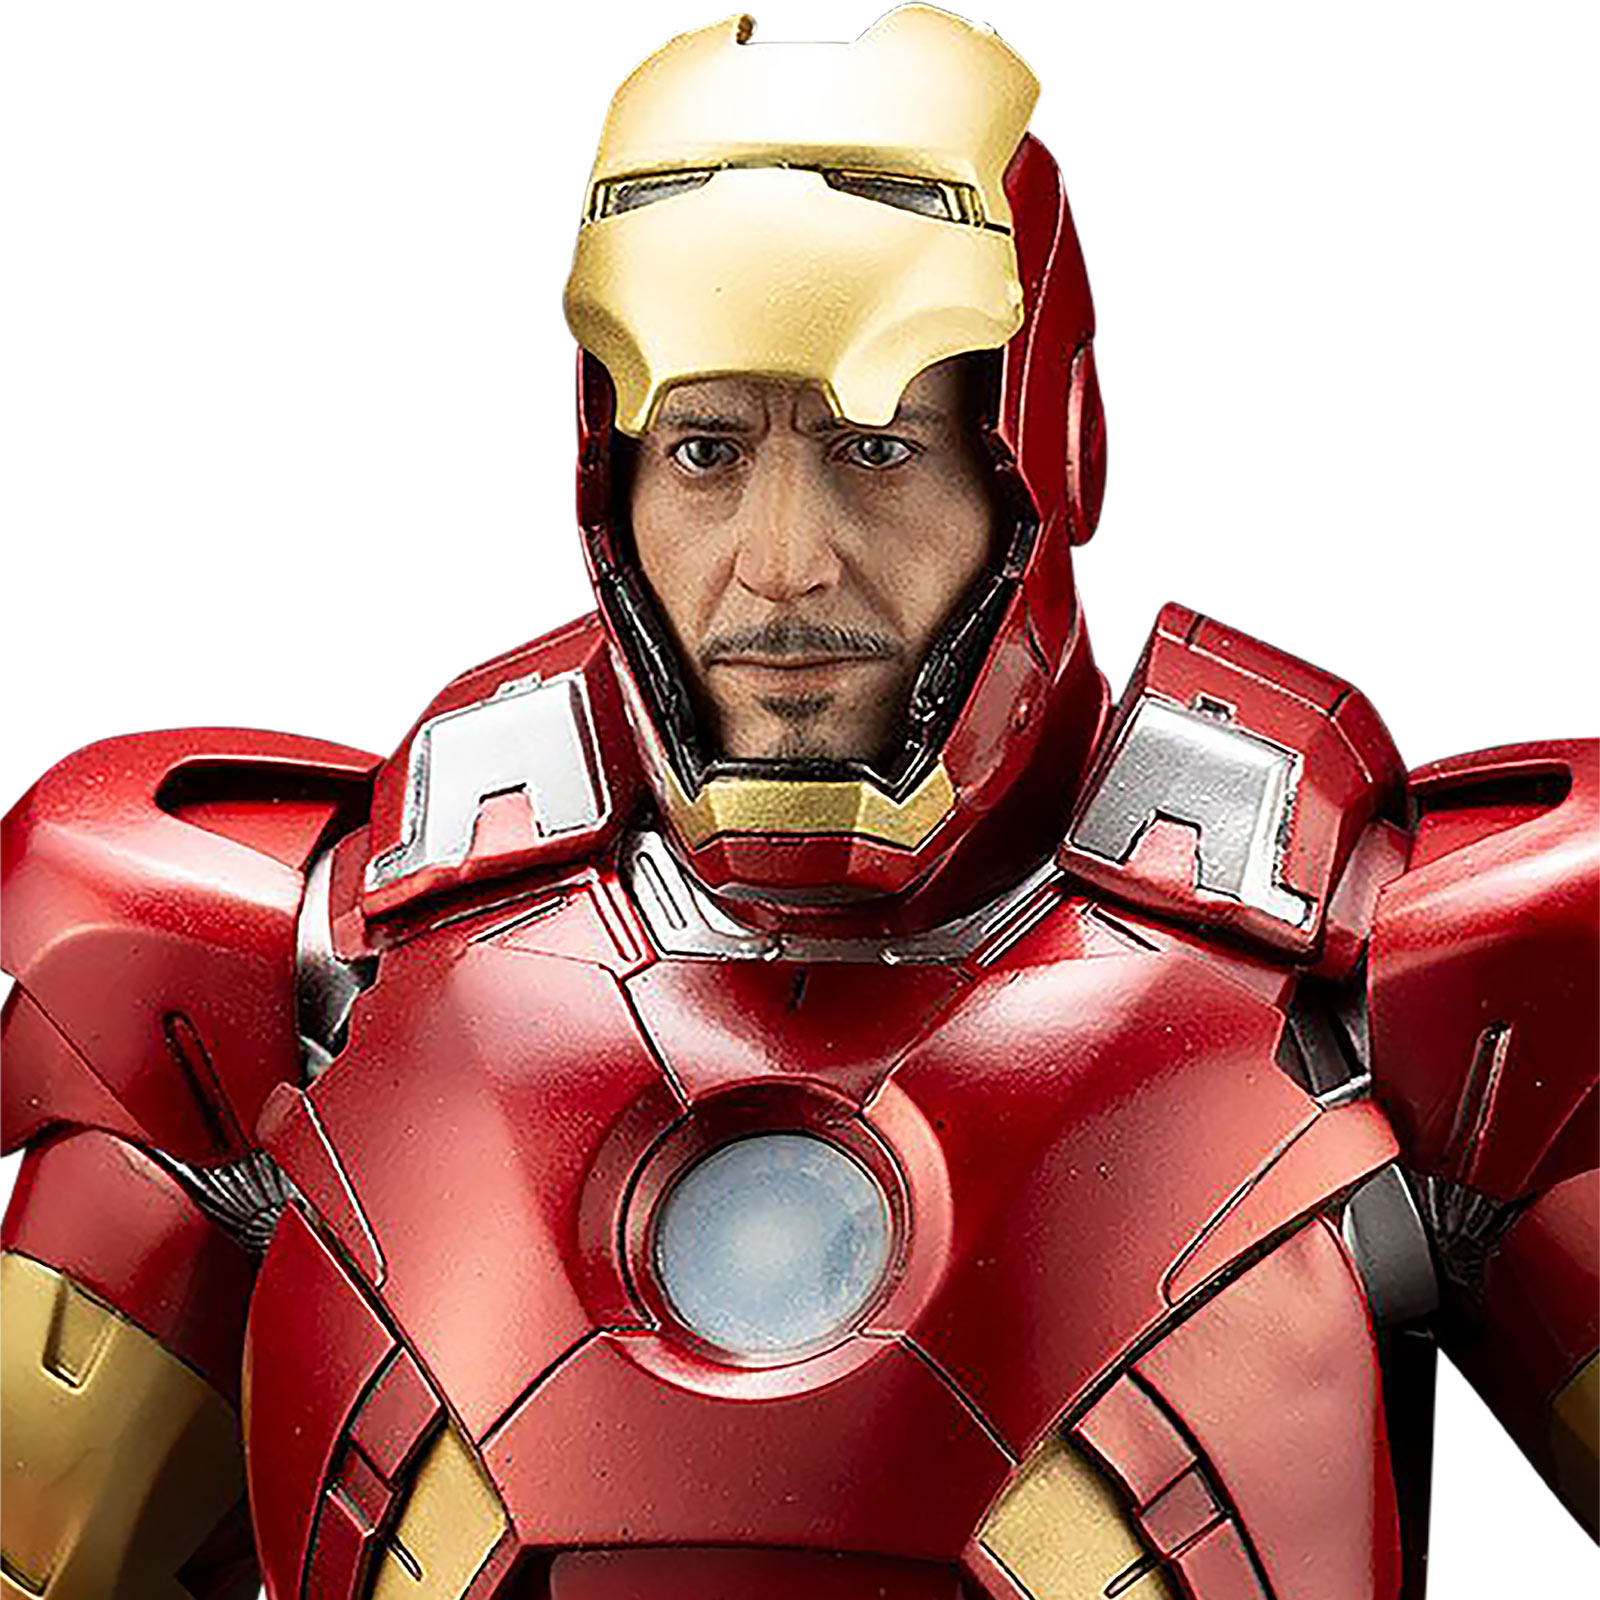 Avengers - Iron Man Mark 7 ARTFX+ Statue 1:6